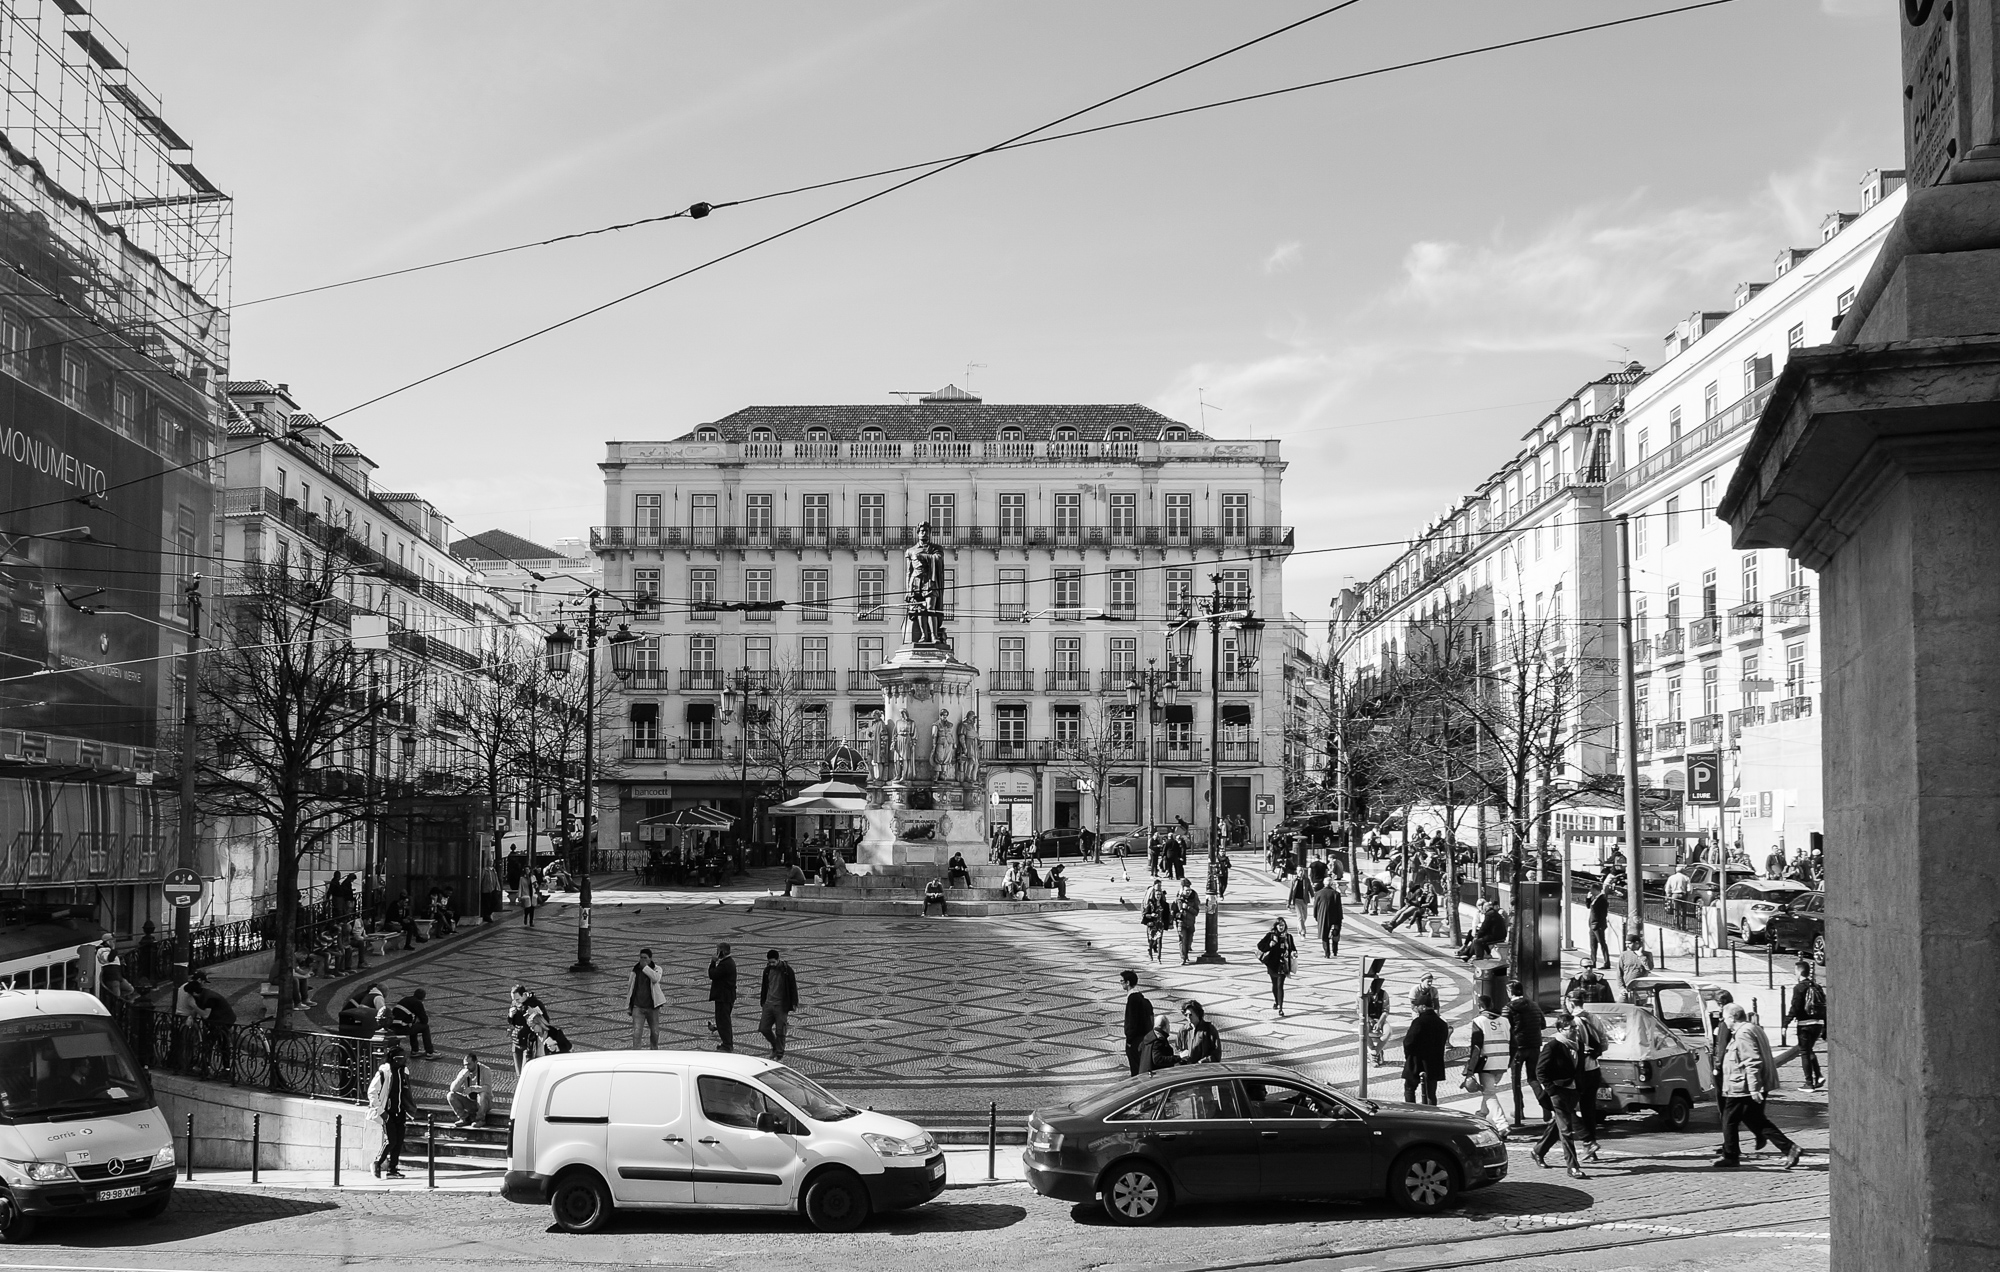 Praça Luís de Camoes, Lisbon, 2019